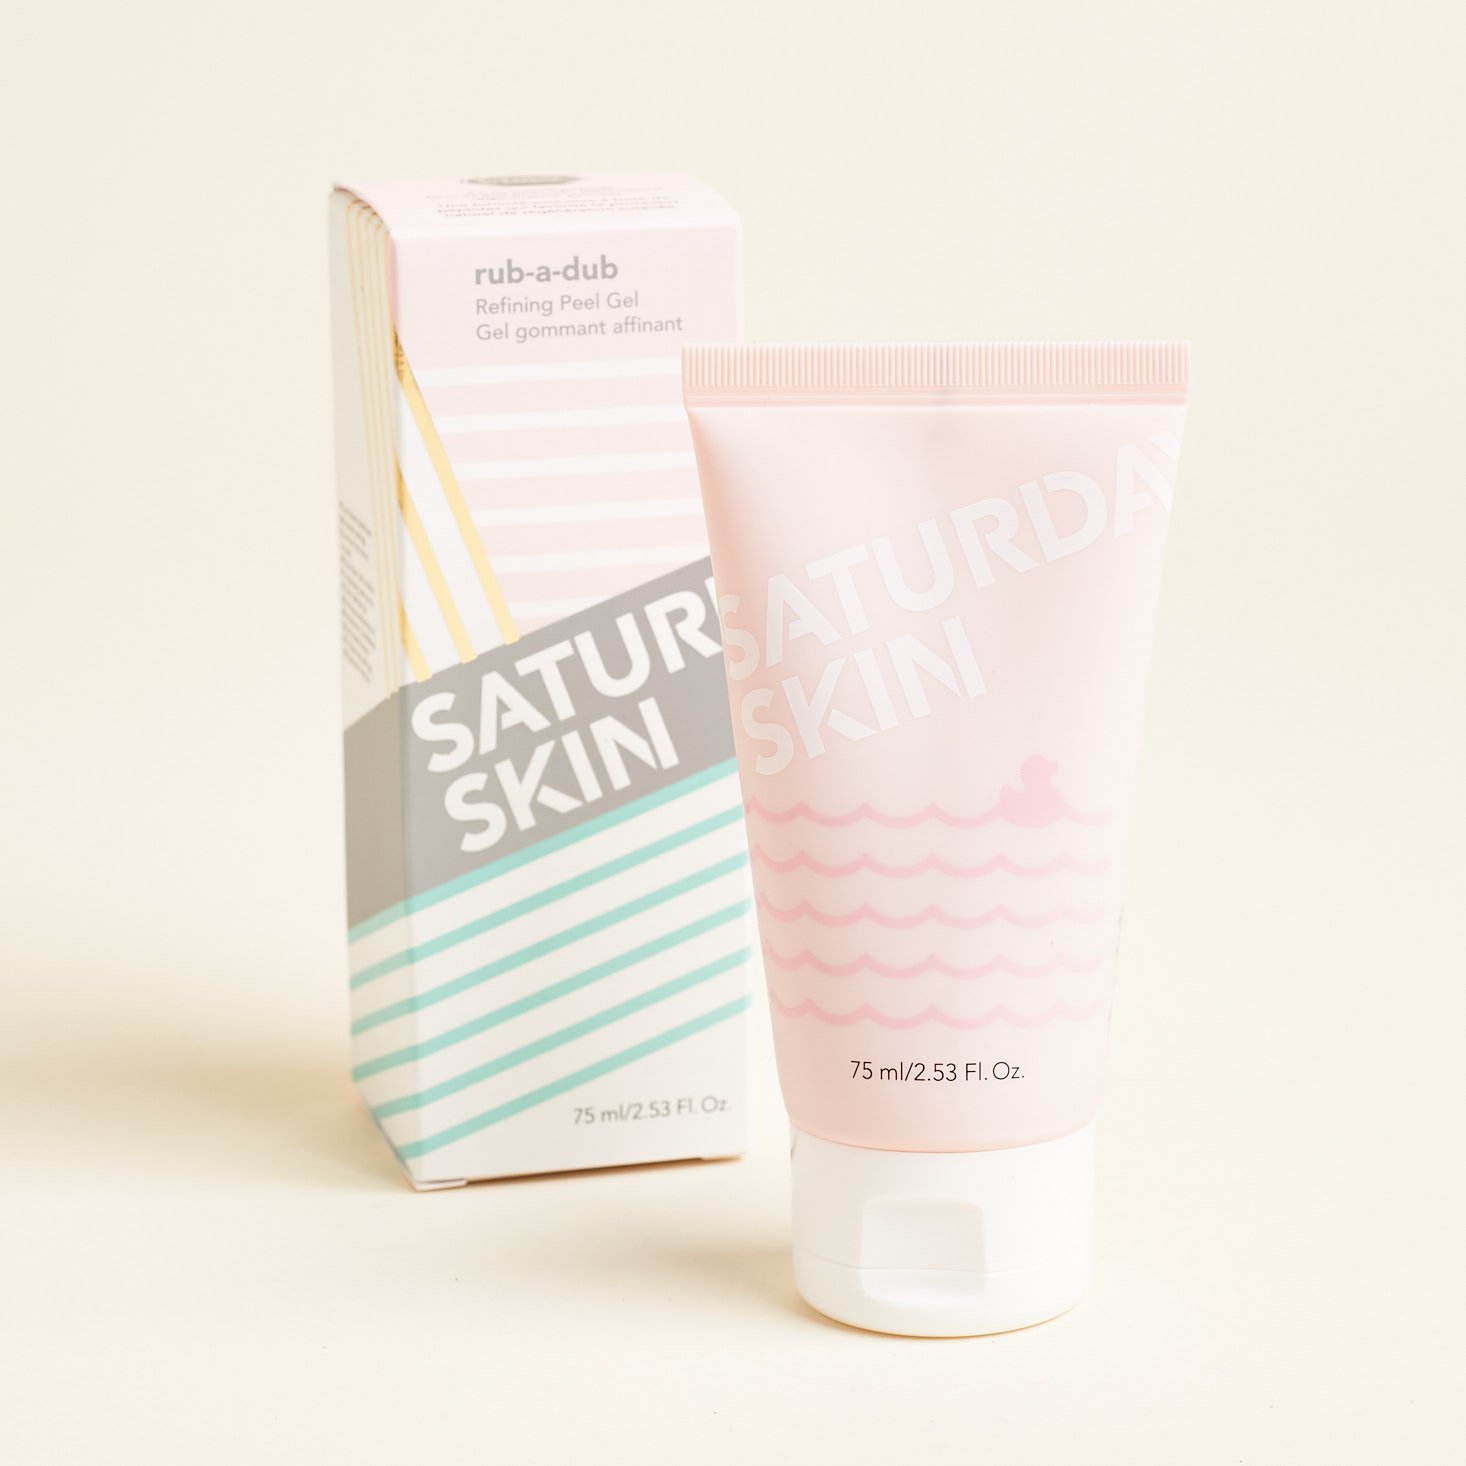 Boxy Charm Limited Skincare May 2019 beauty box review saturday skin peel